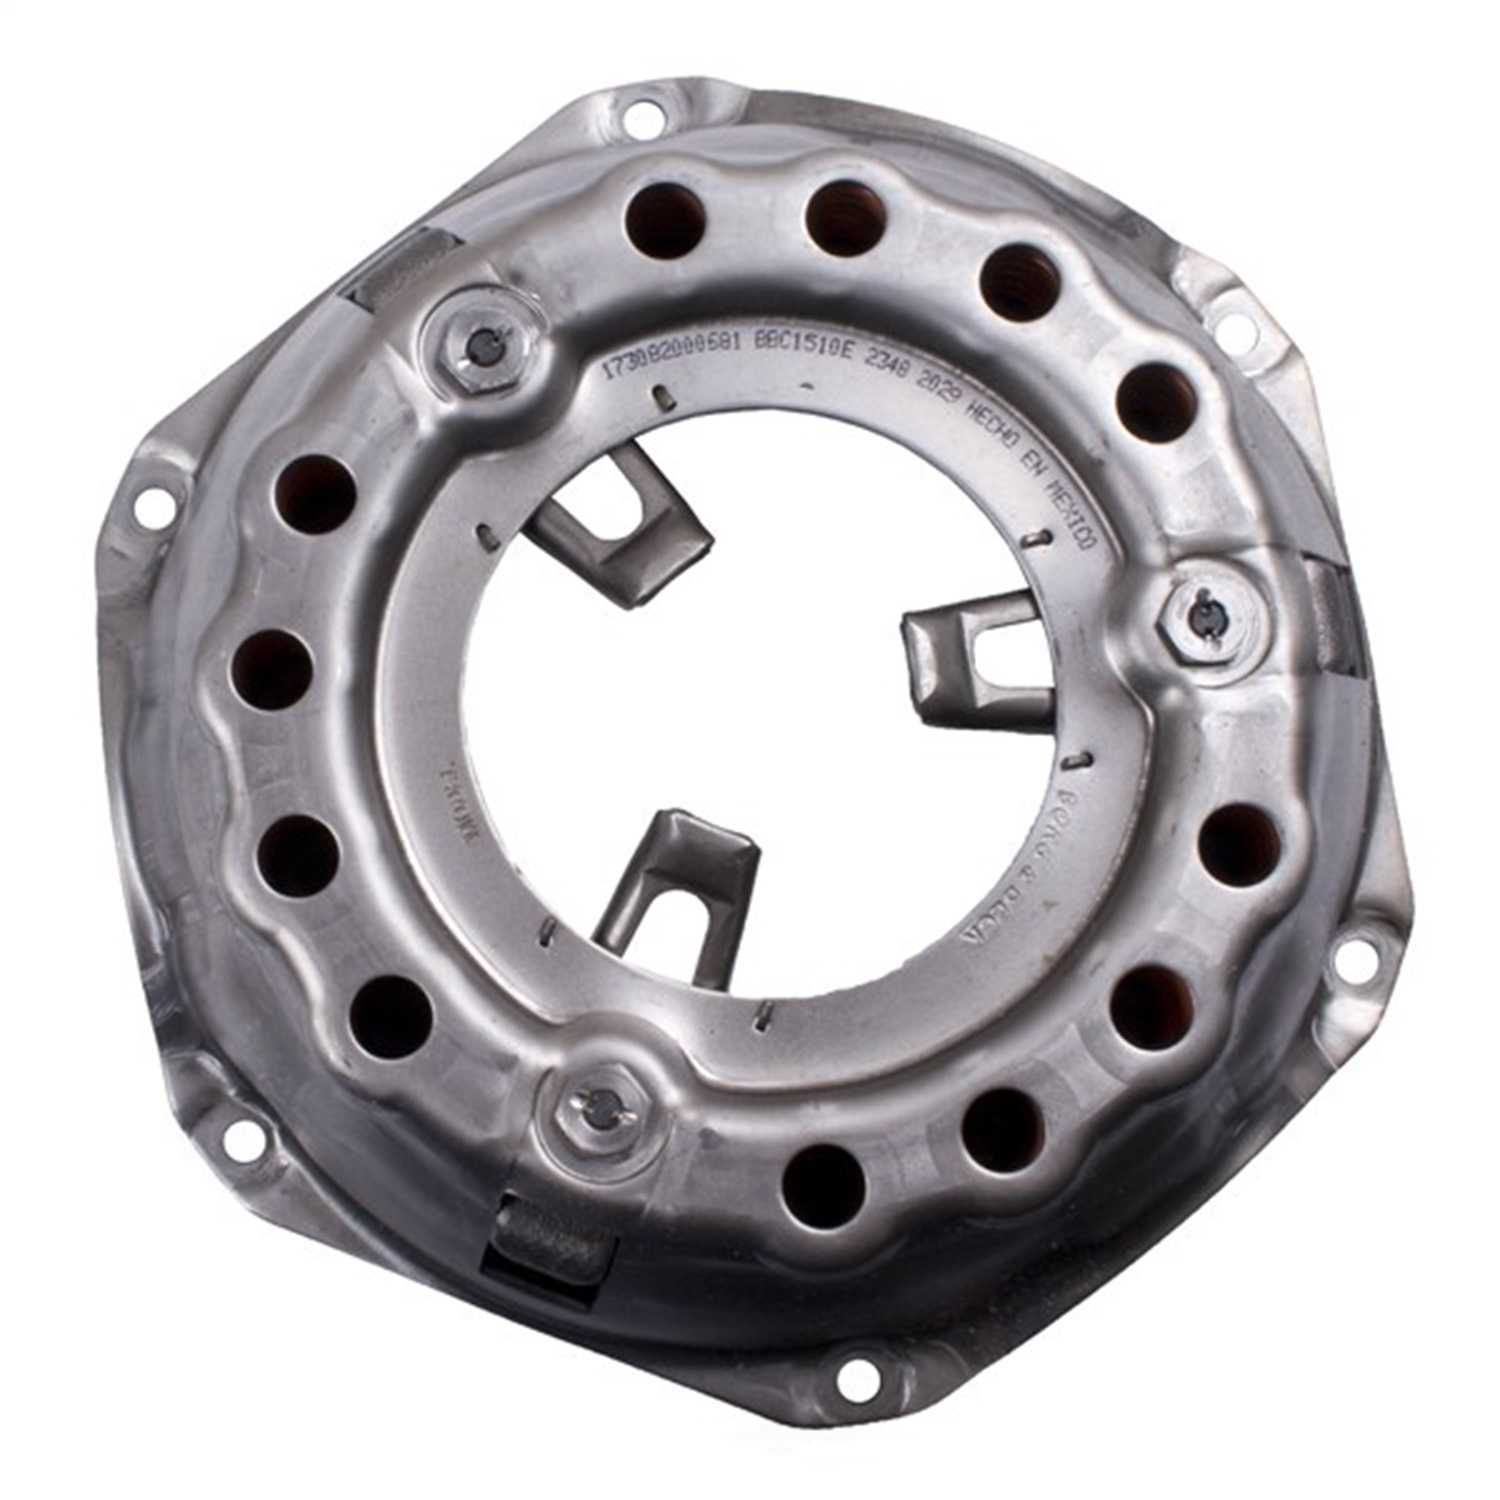 OMIX - Clutch Flywheel Cover - OMX 16904.06